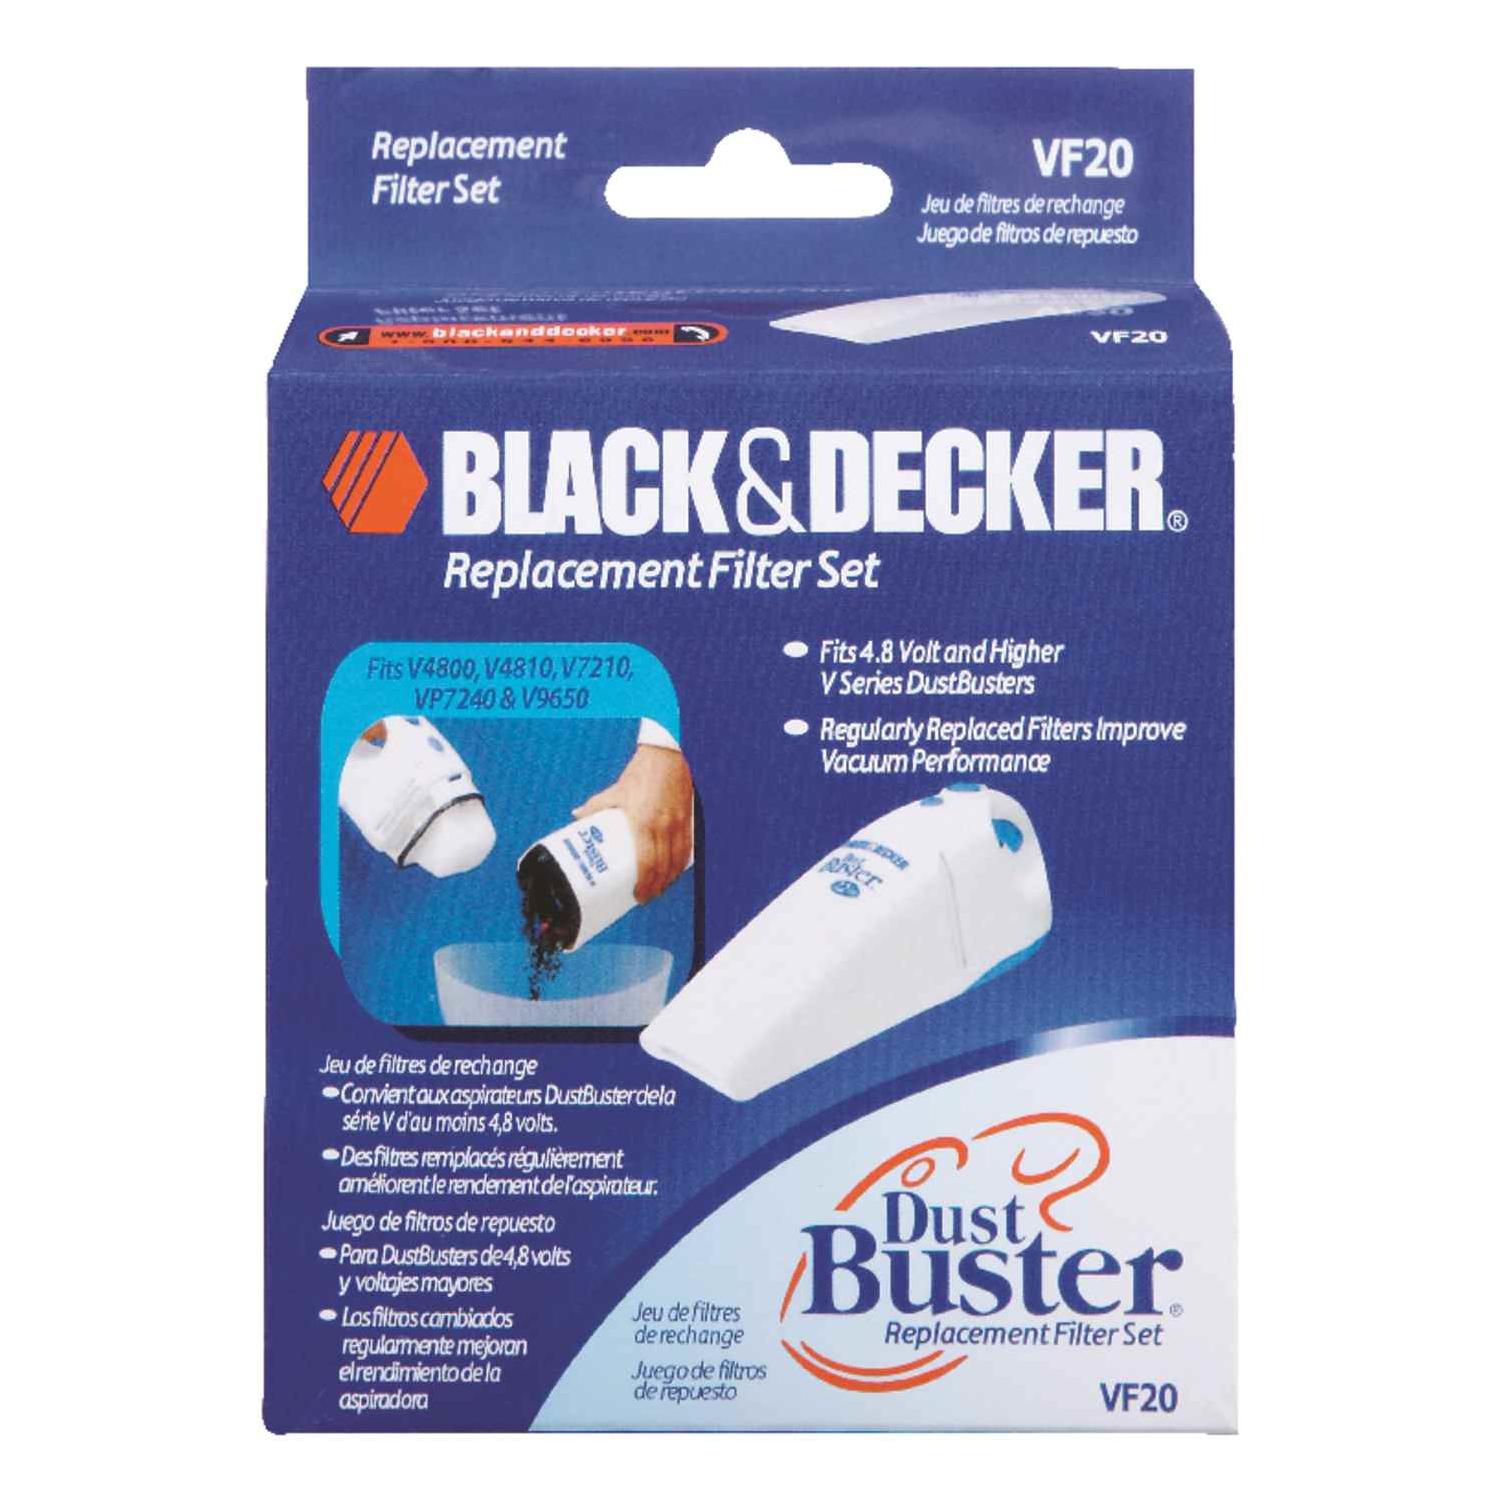 NEW Black & Decker DustBuster Cordless Vac VF10 Replacement Filter Set 